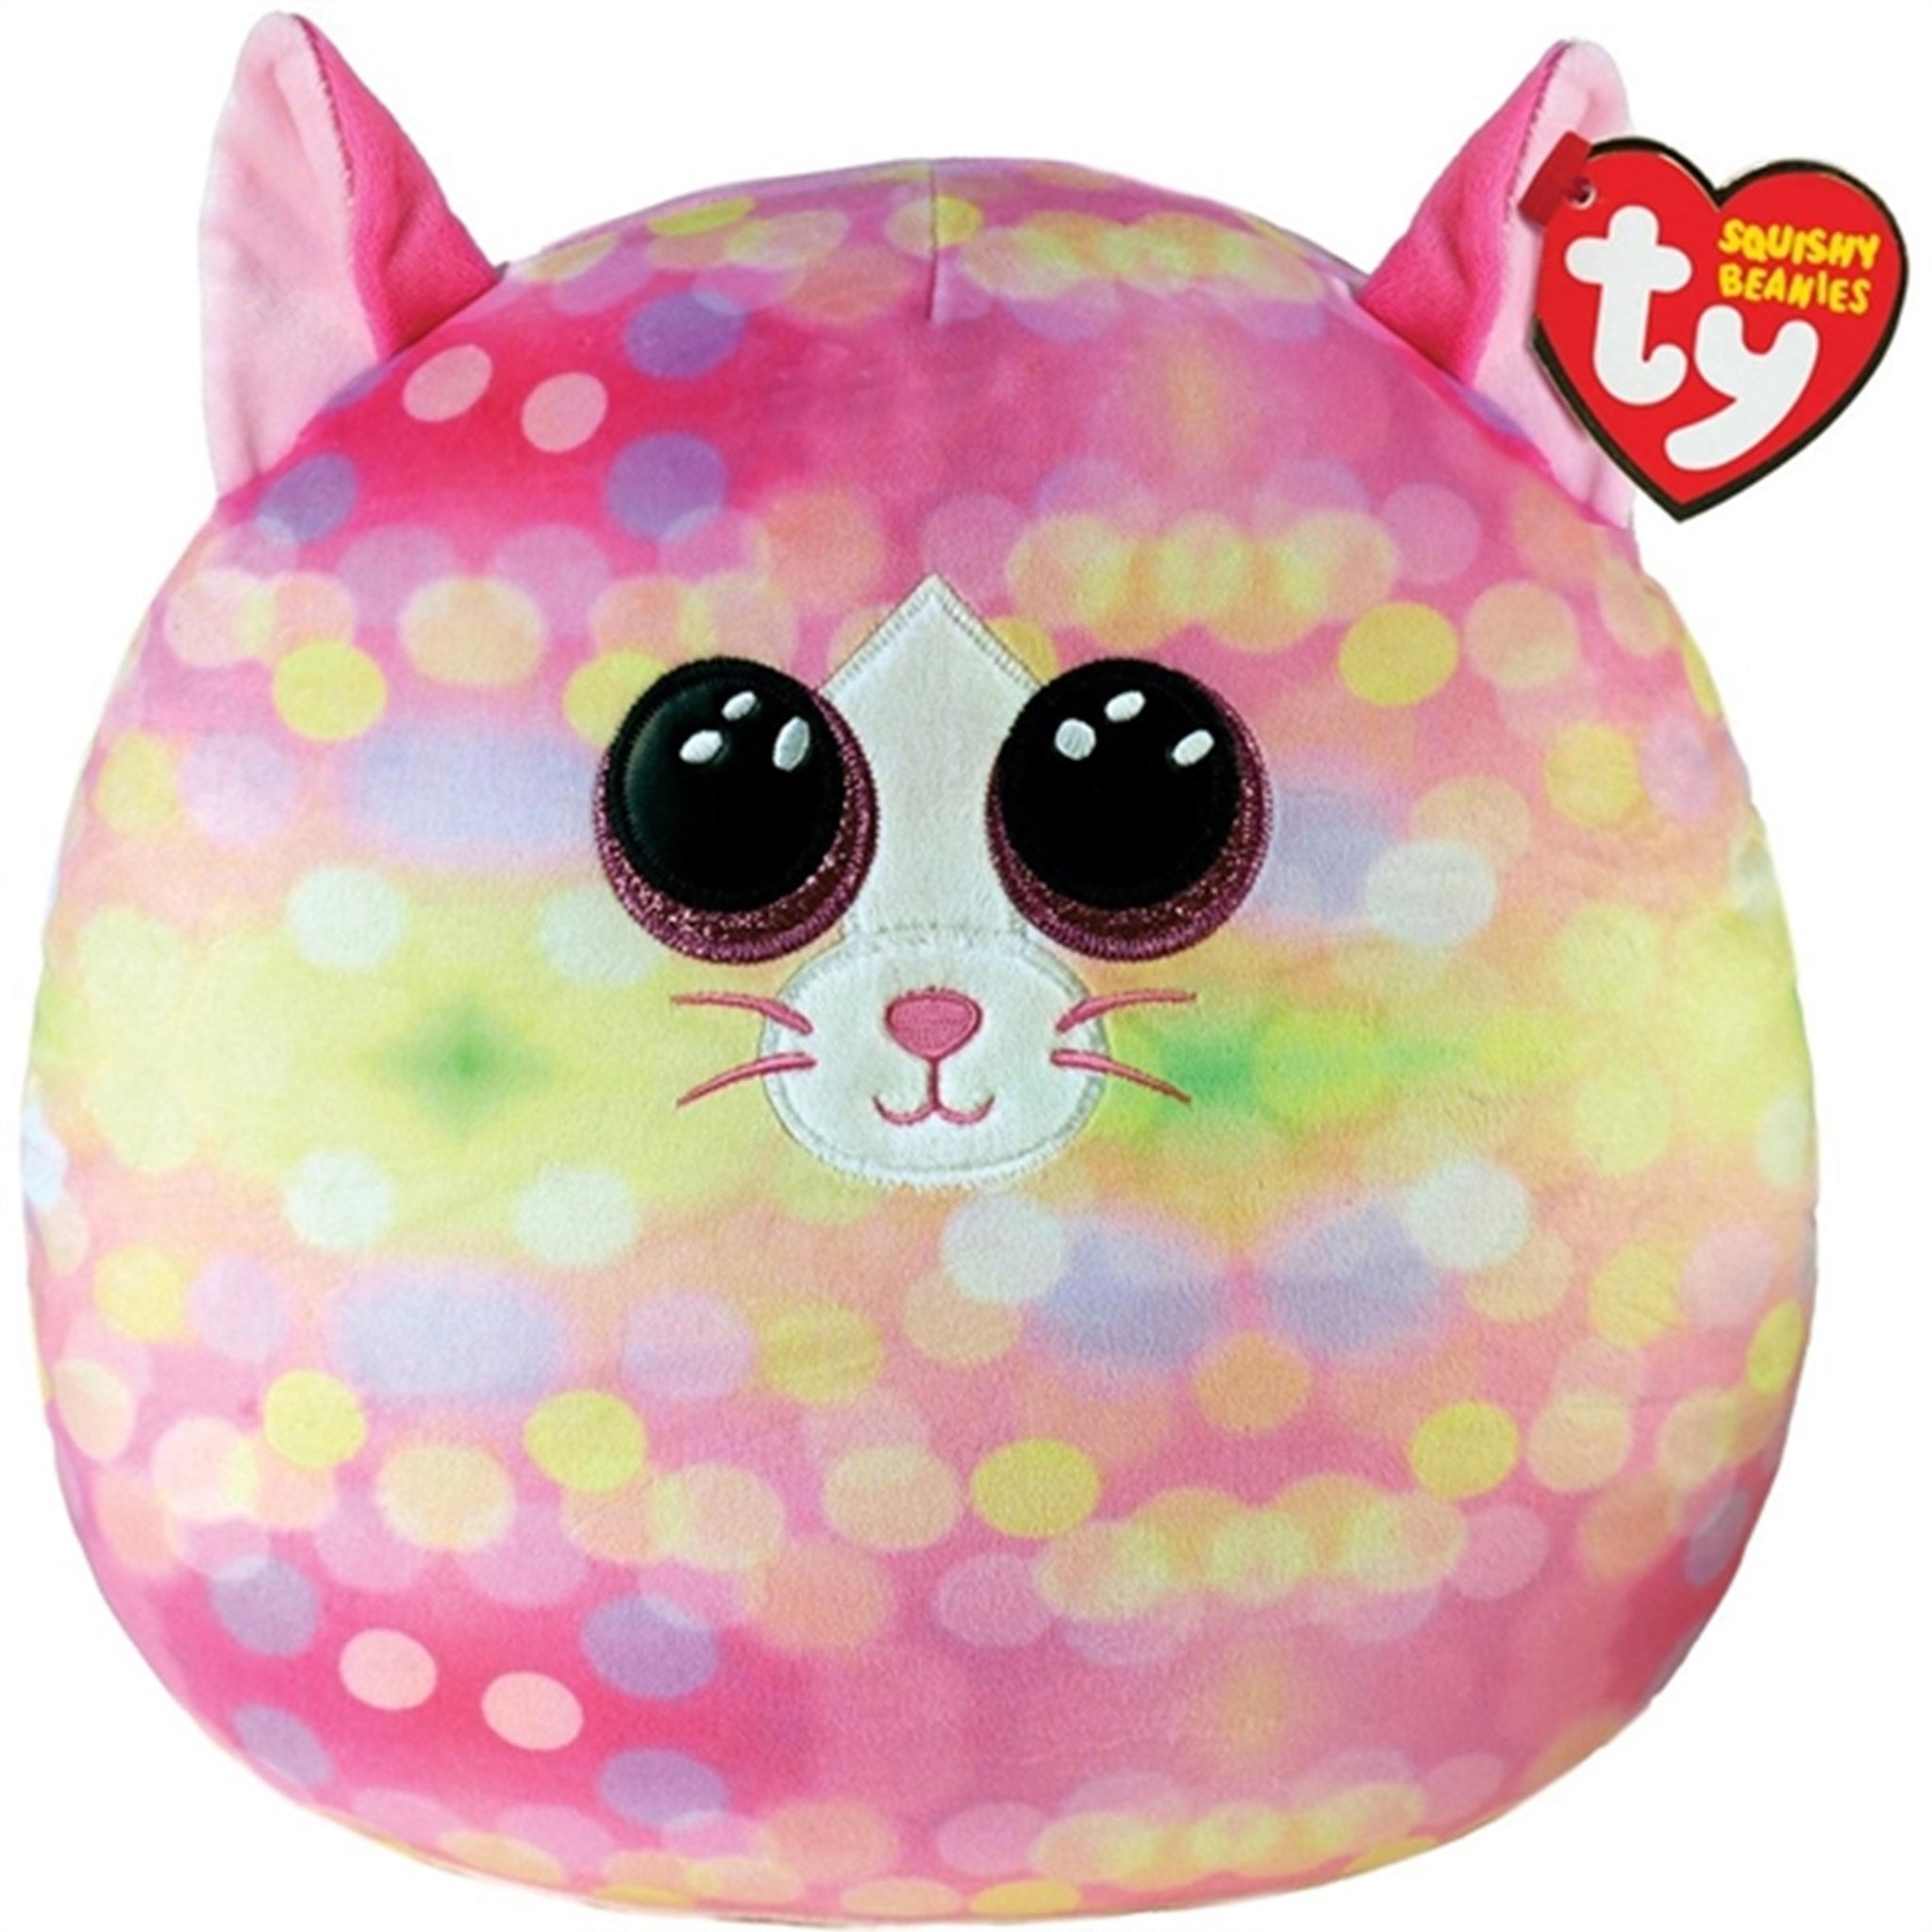 TY Squishy Beanies Sonny - Pink Pattern Kat Squish 25cm